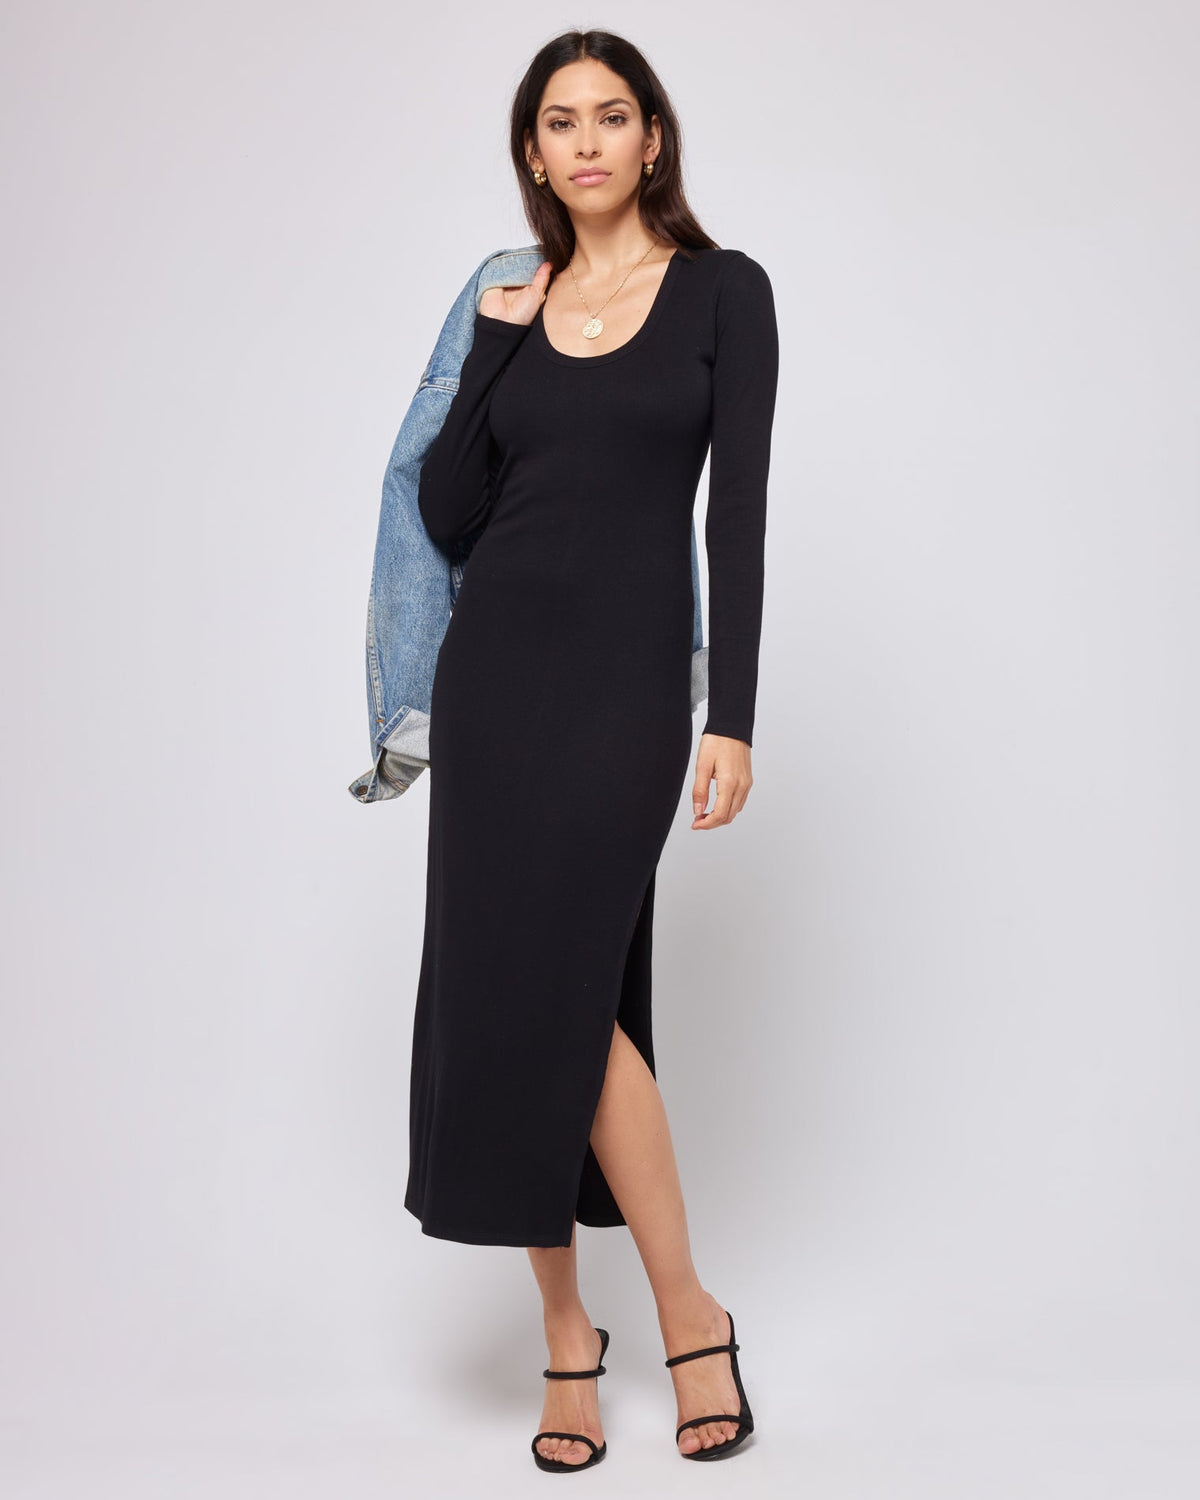 Eloise Dress - Black Black | Model: Julianna (size: S)